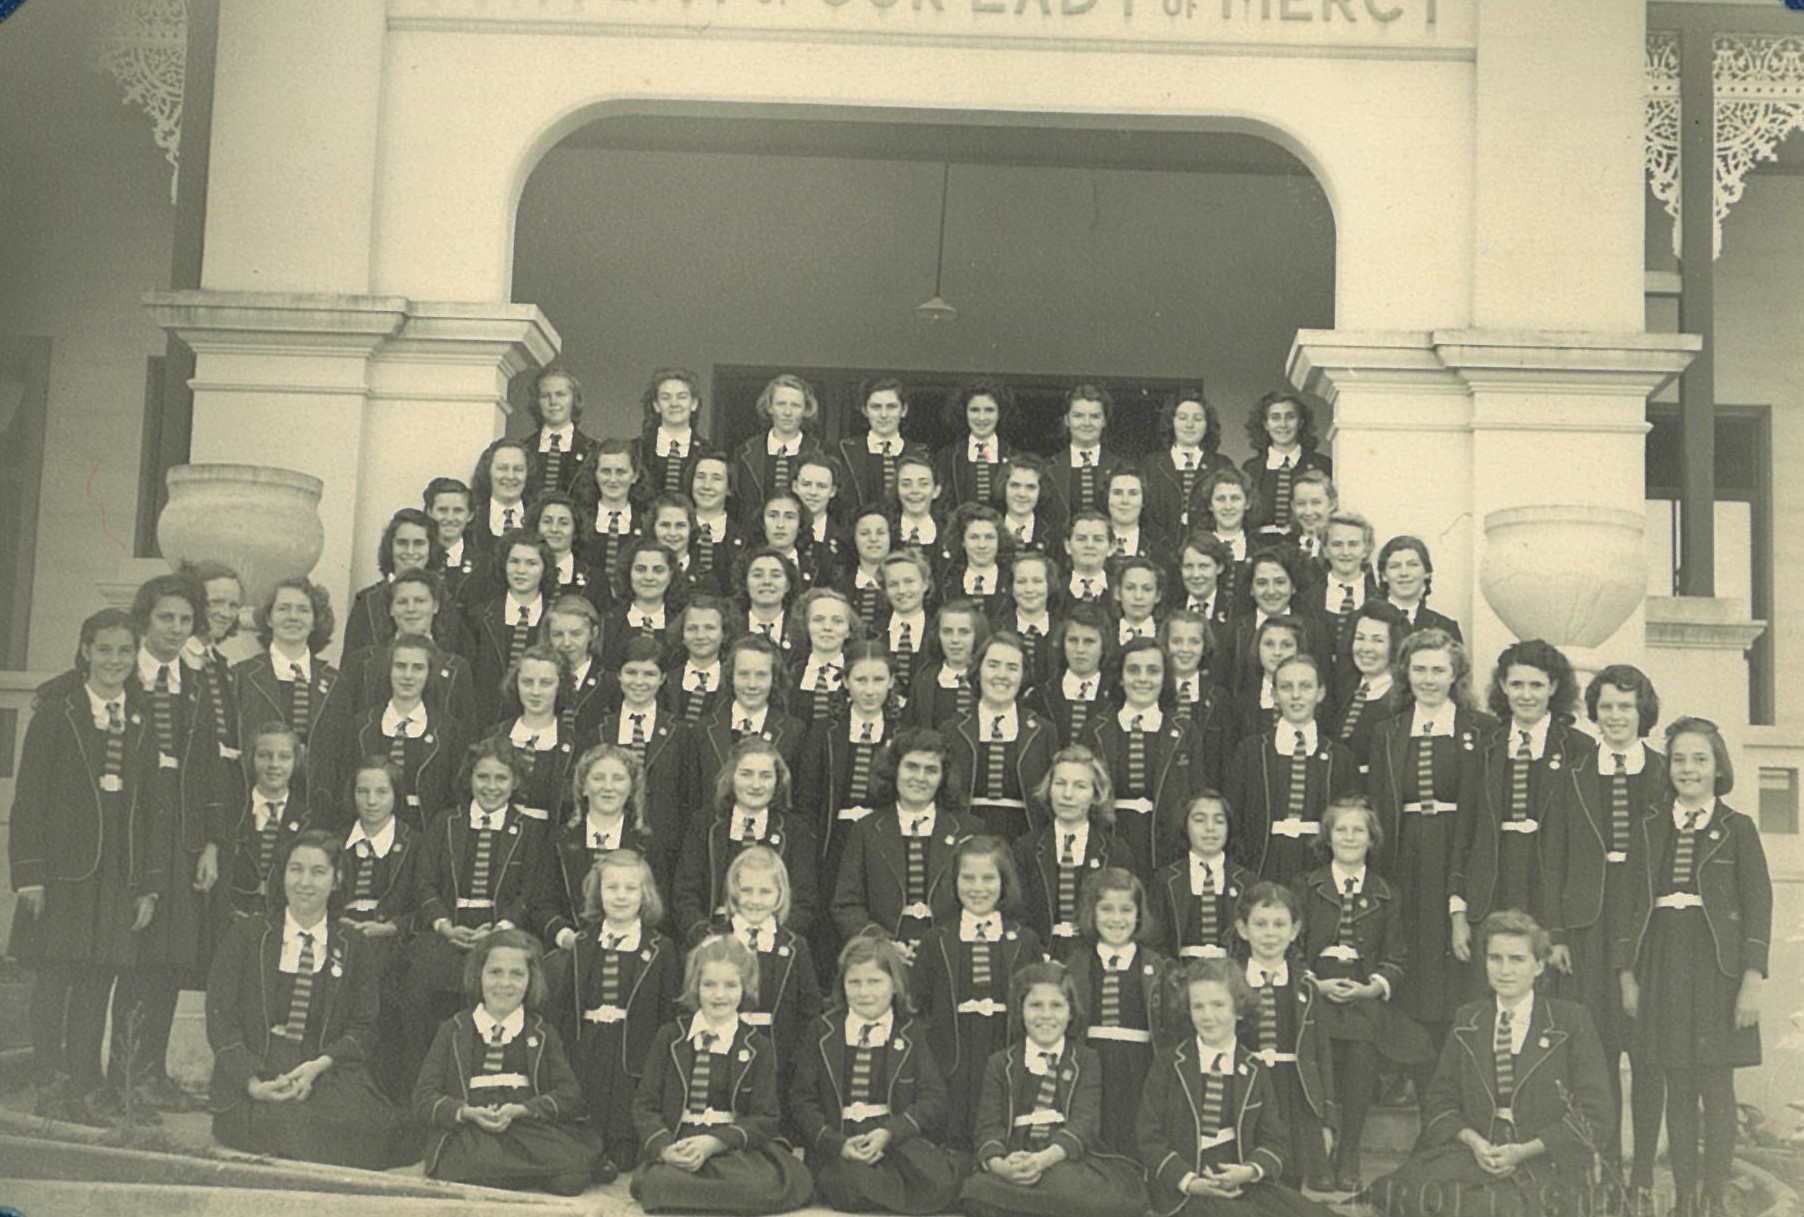 1949 College Photo